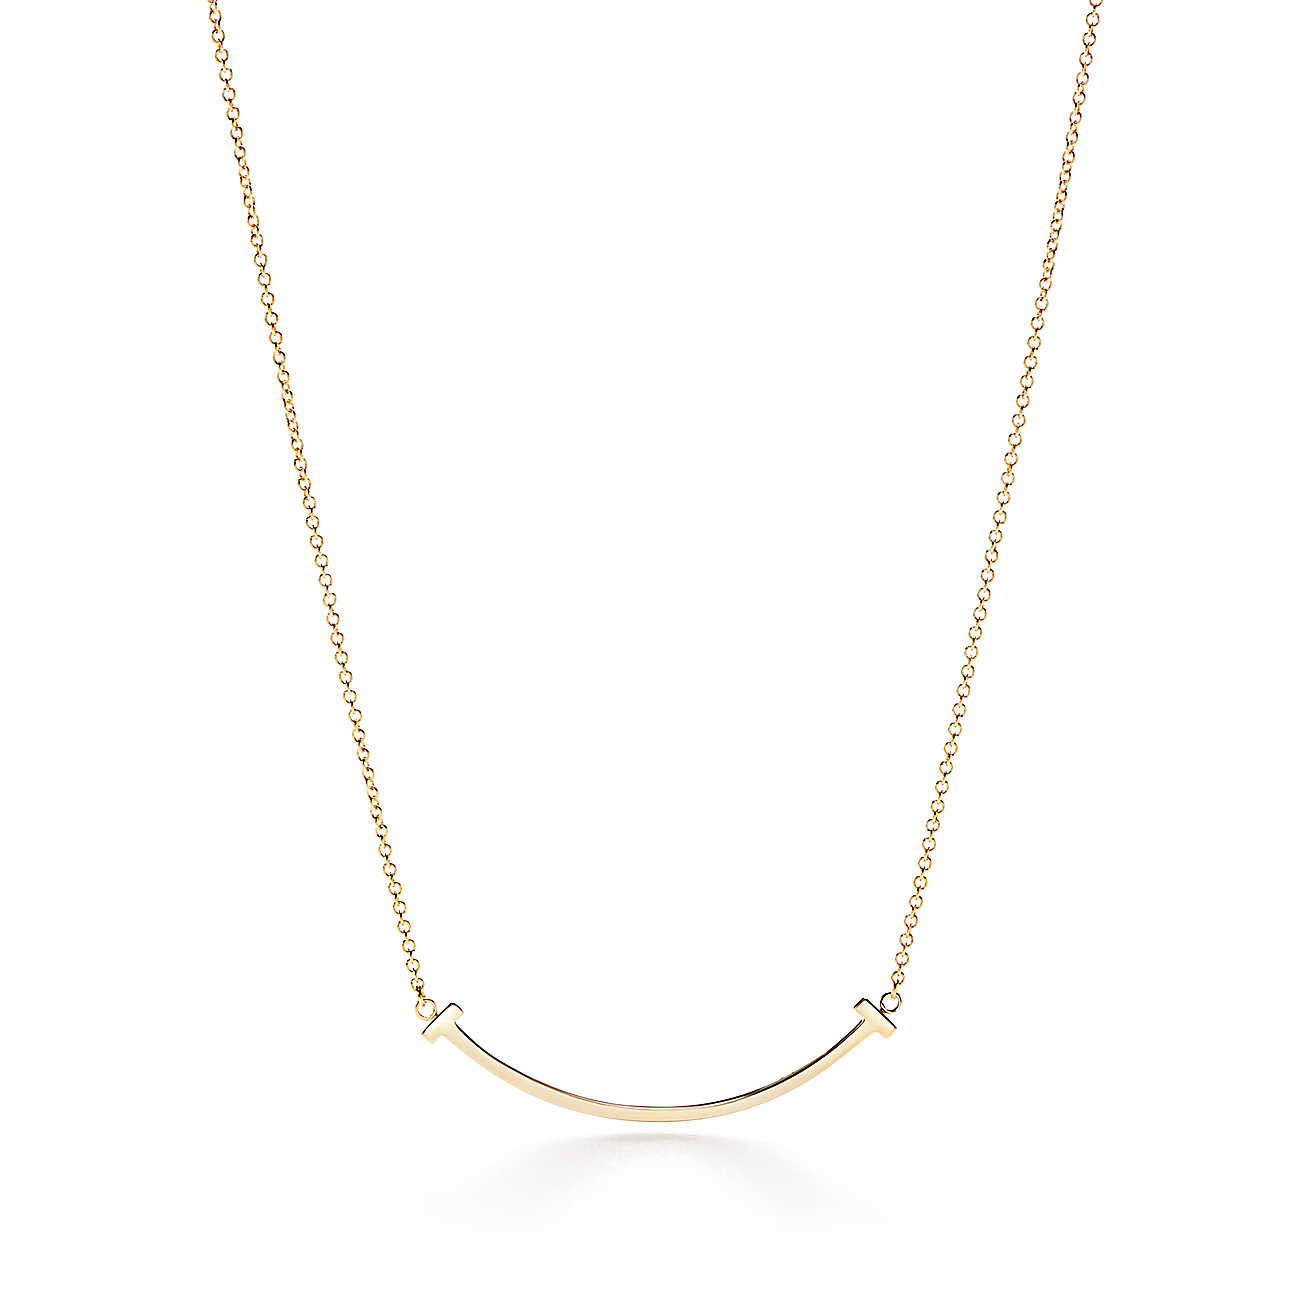 Tiffany Necklaces Under 200
 Tiffany T smile pendant in 18k gold mini